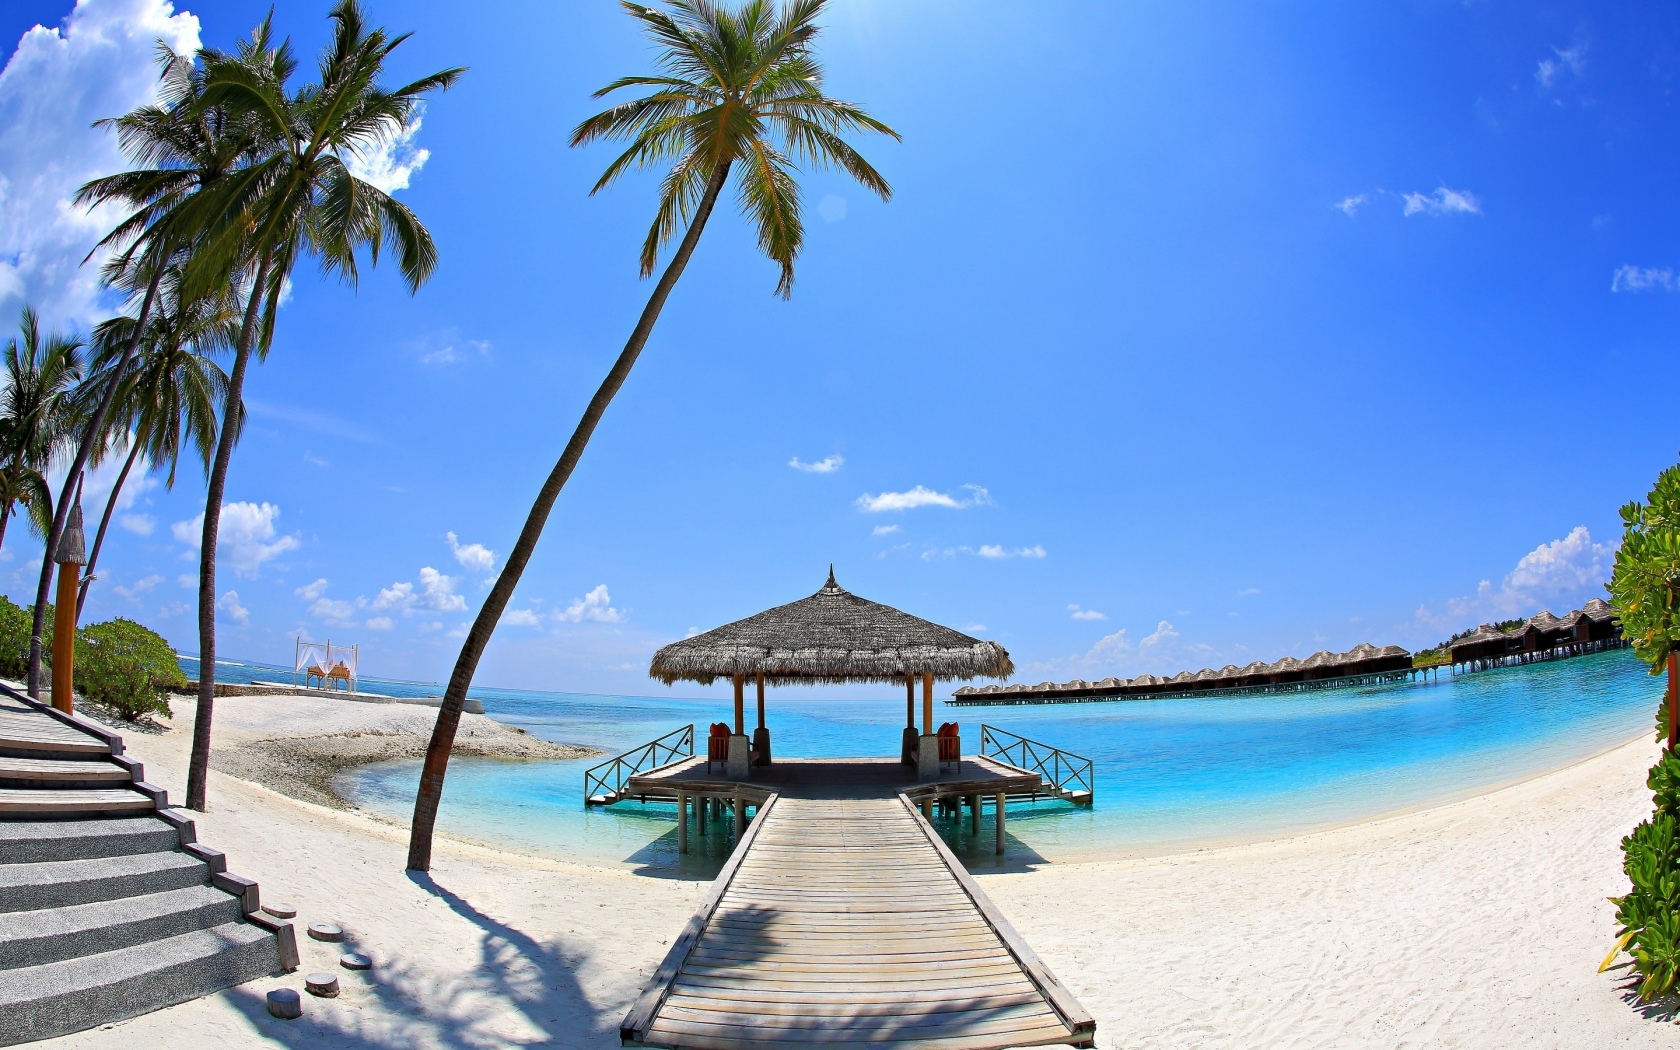 Sunny Palm Beach Corner  for 1680 x 1050 widescreen resolution